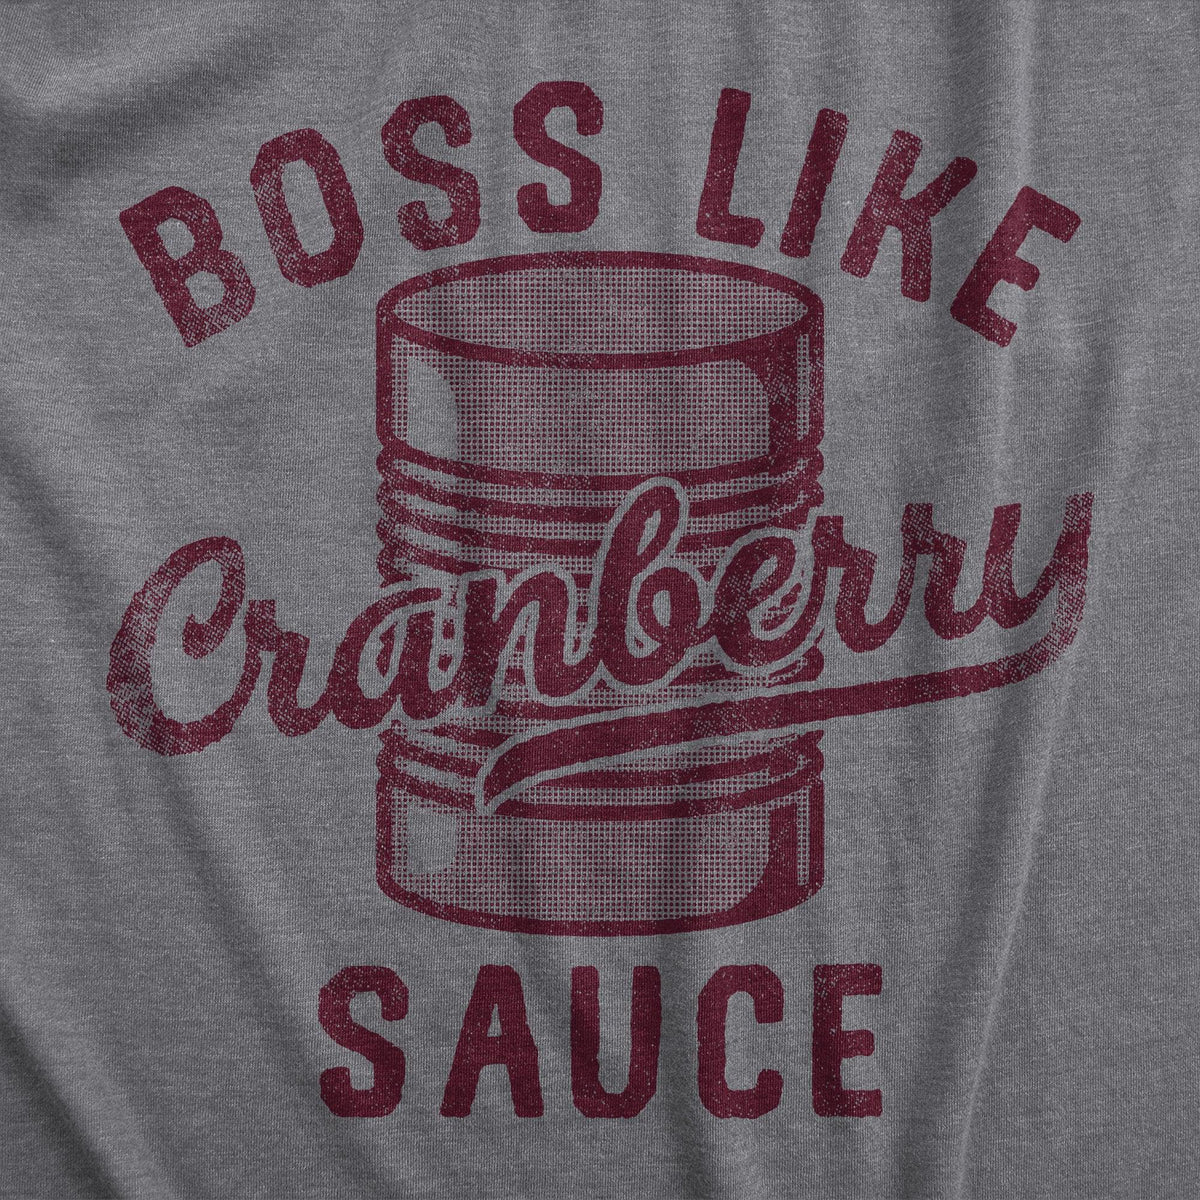 Boss Like Cranberry Sauce Women&#39;s Tshirt  -  Crazy Dog T-Shirts